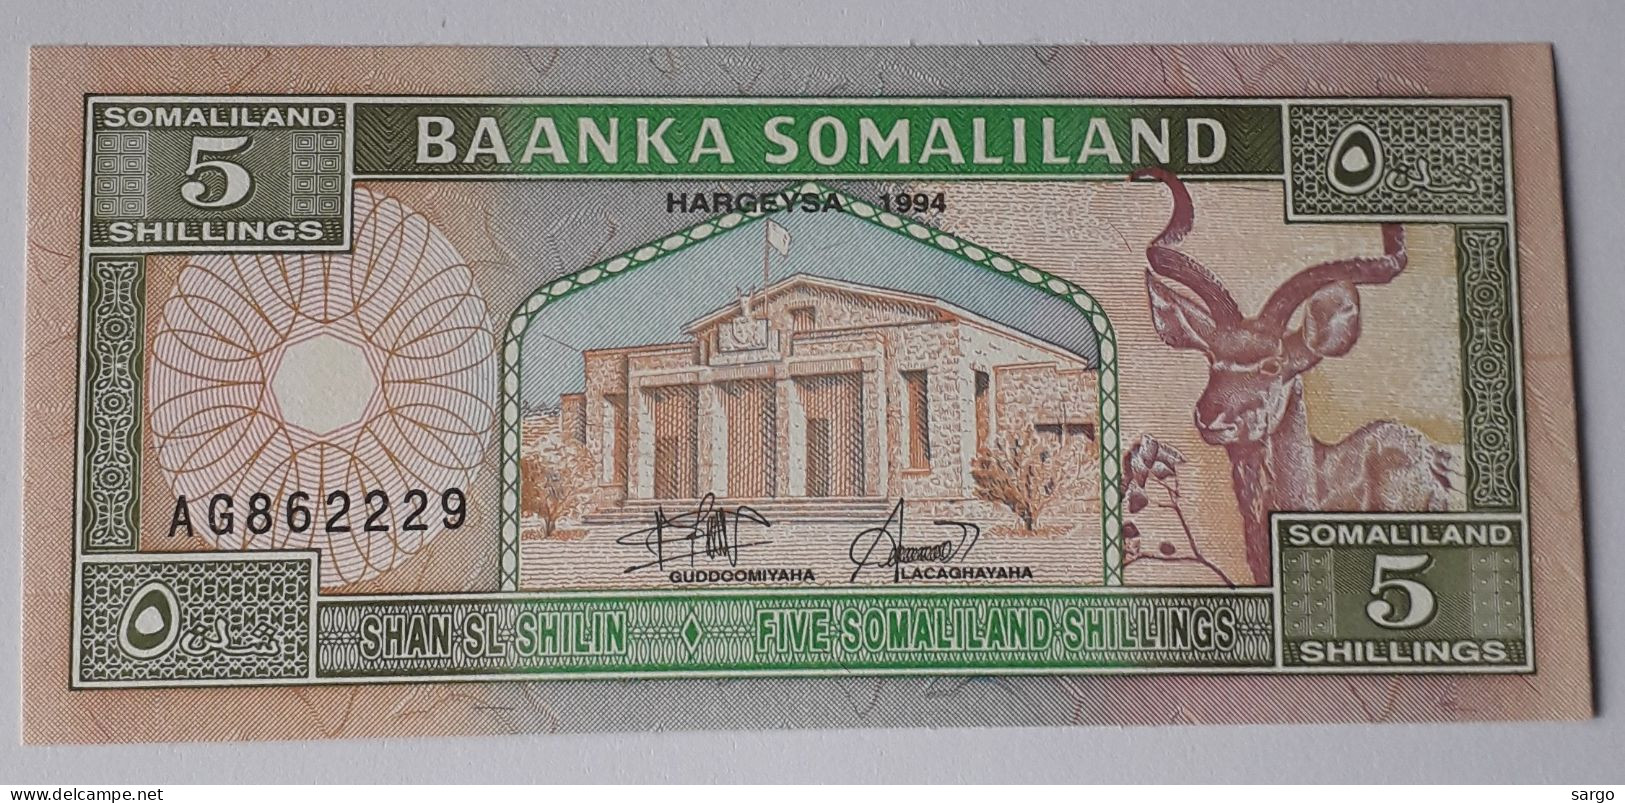 SOMALILAND - SOMALIA  - 5 SHILLINGS - P 1  (1994)  - UNC -  BANKNOTES - PAPER MONEY - CARTAMONETA - - Somalie